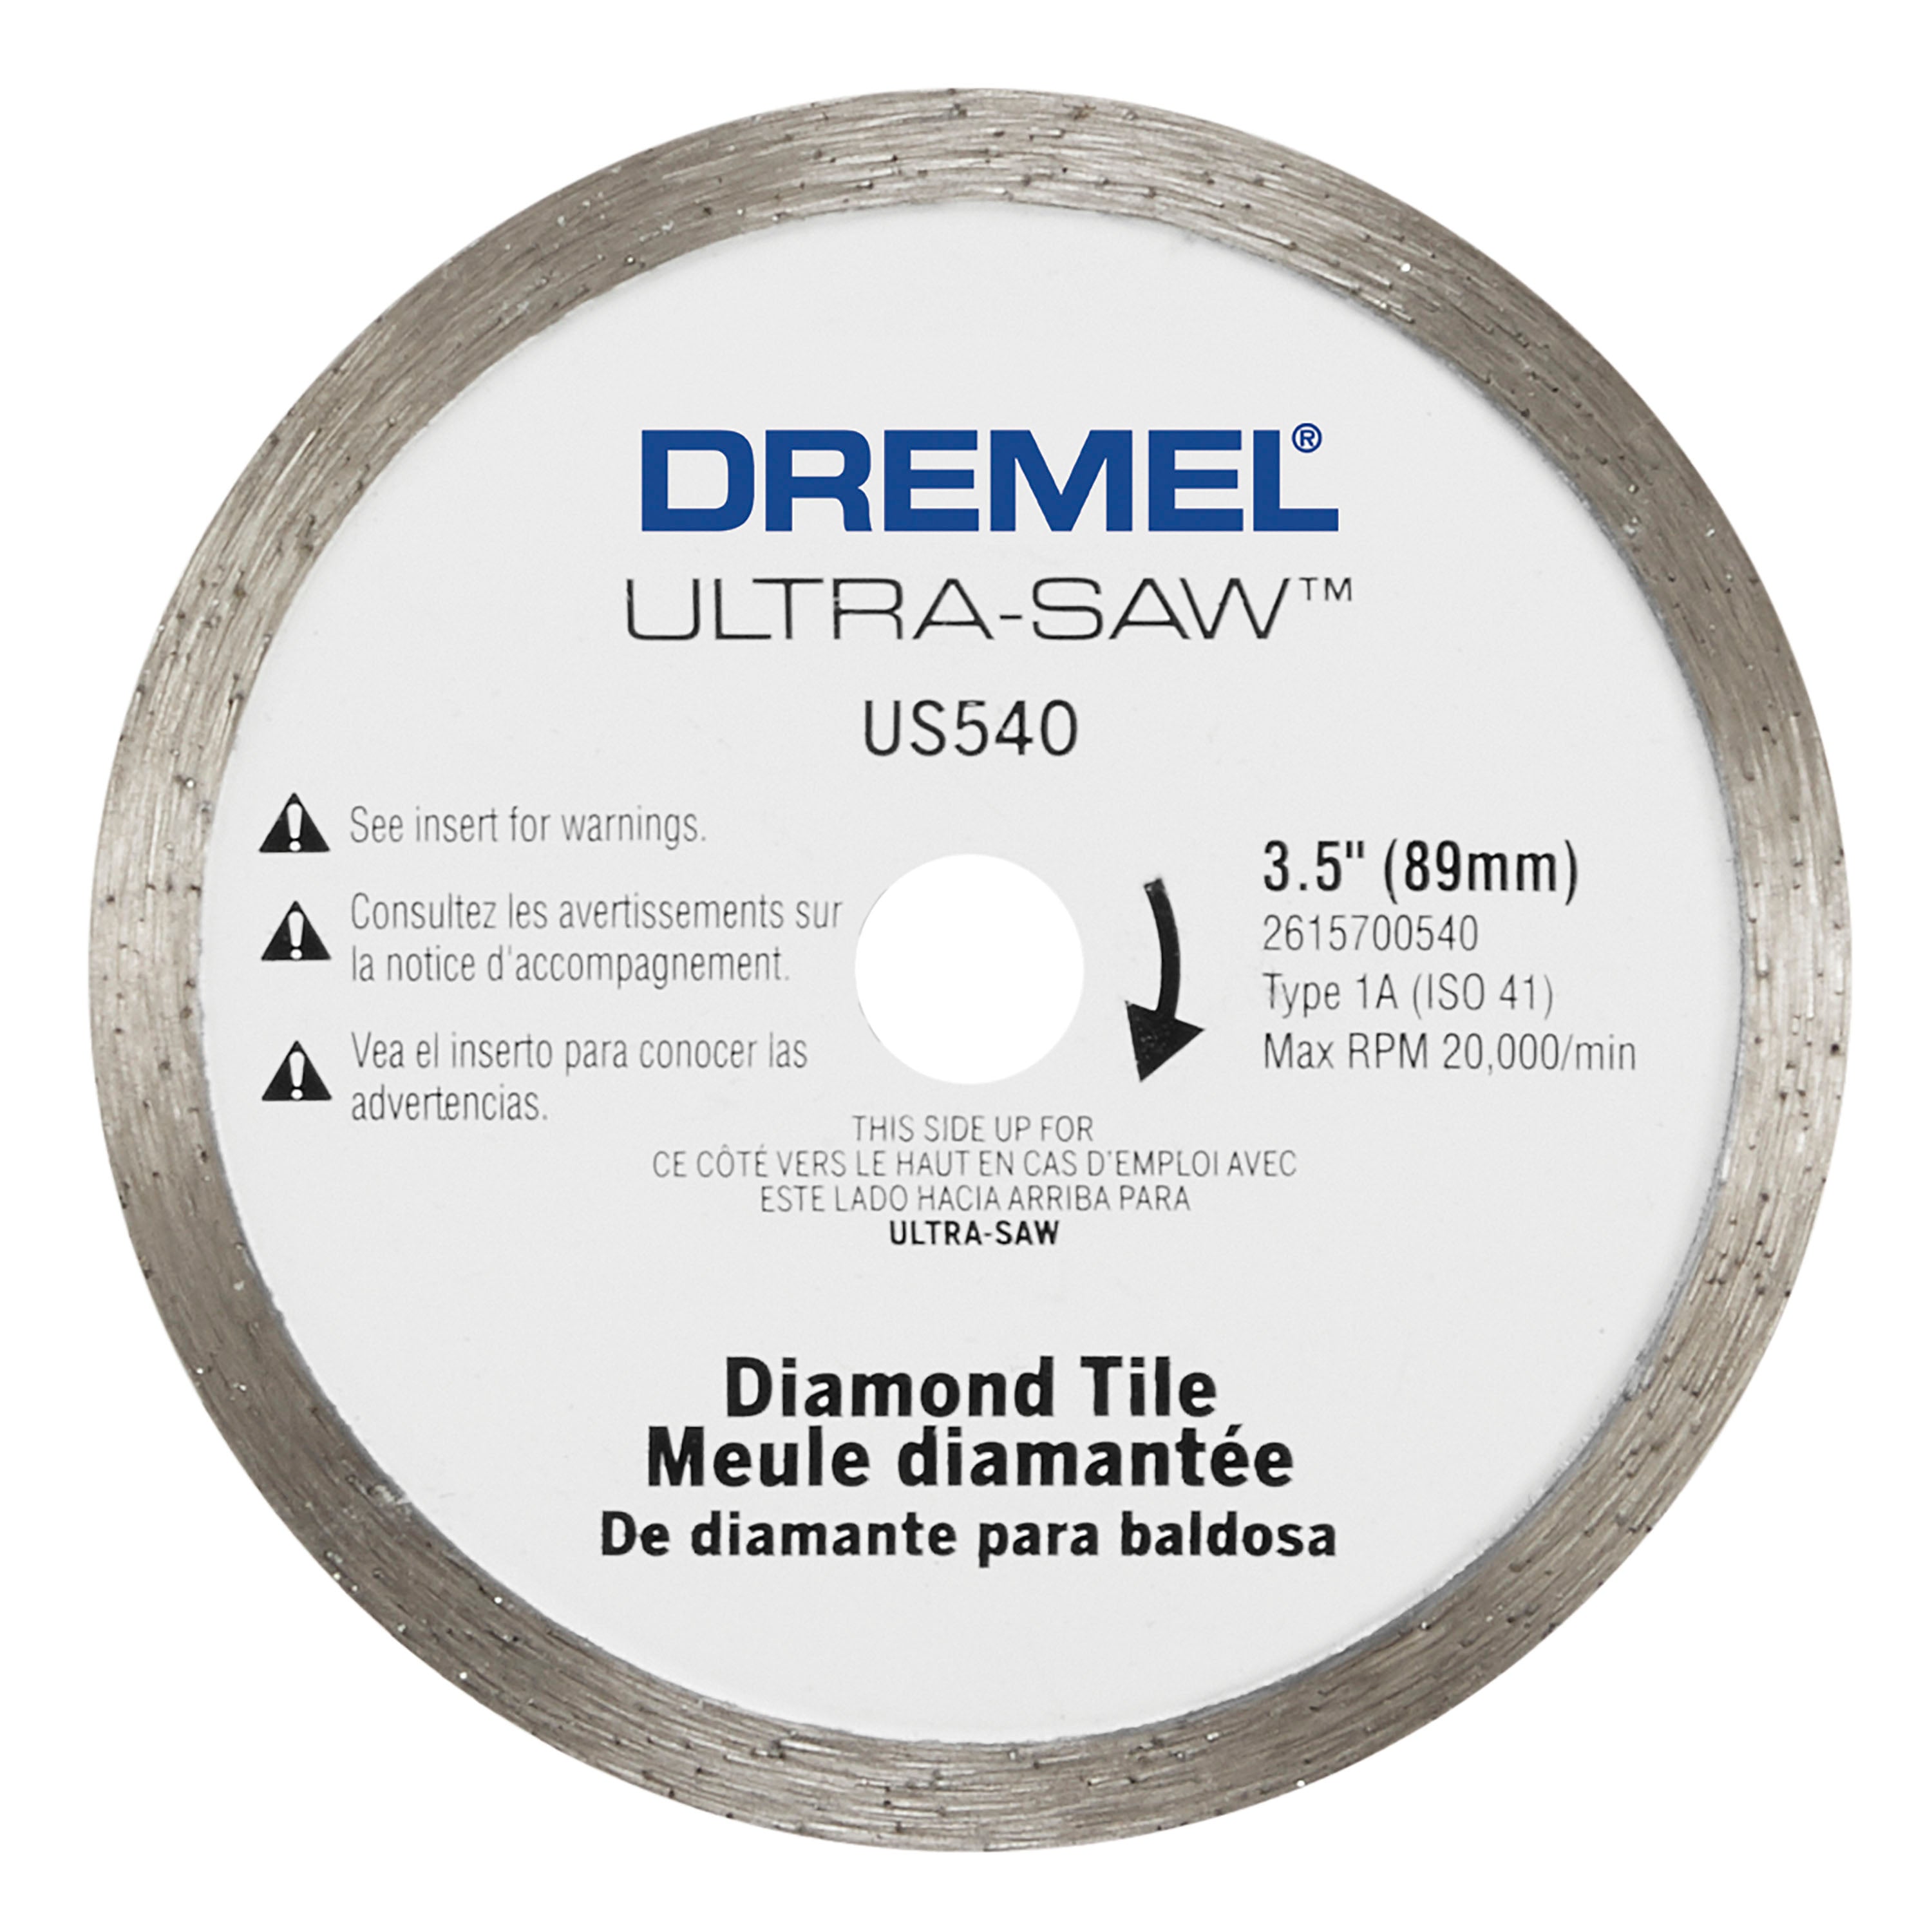 Dremel US700 - 6pc Ultra-Saw Blade Set